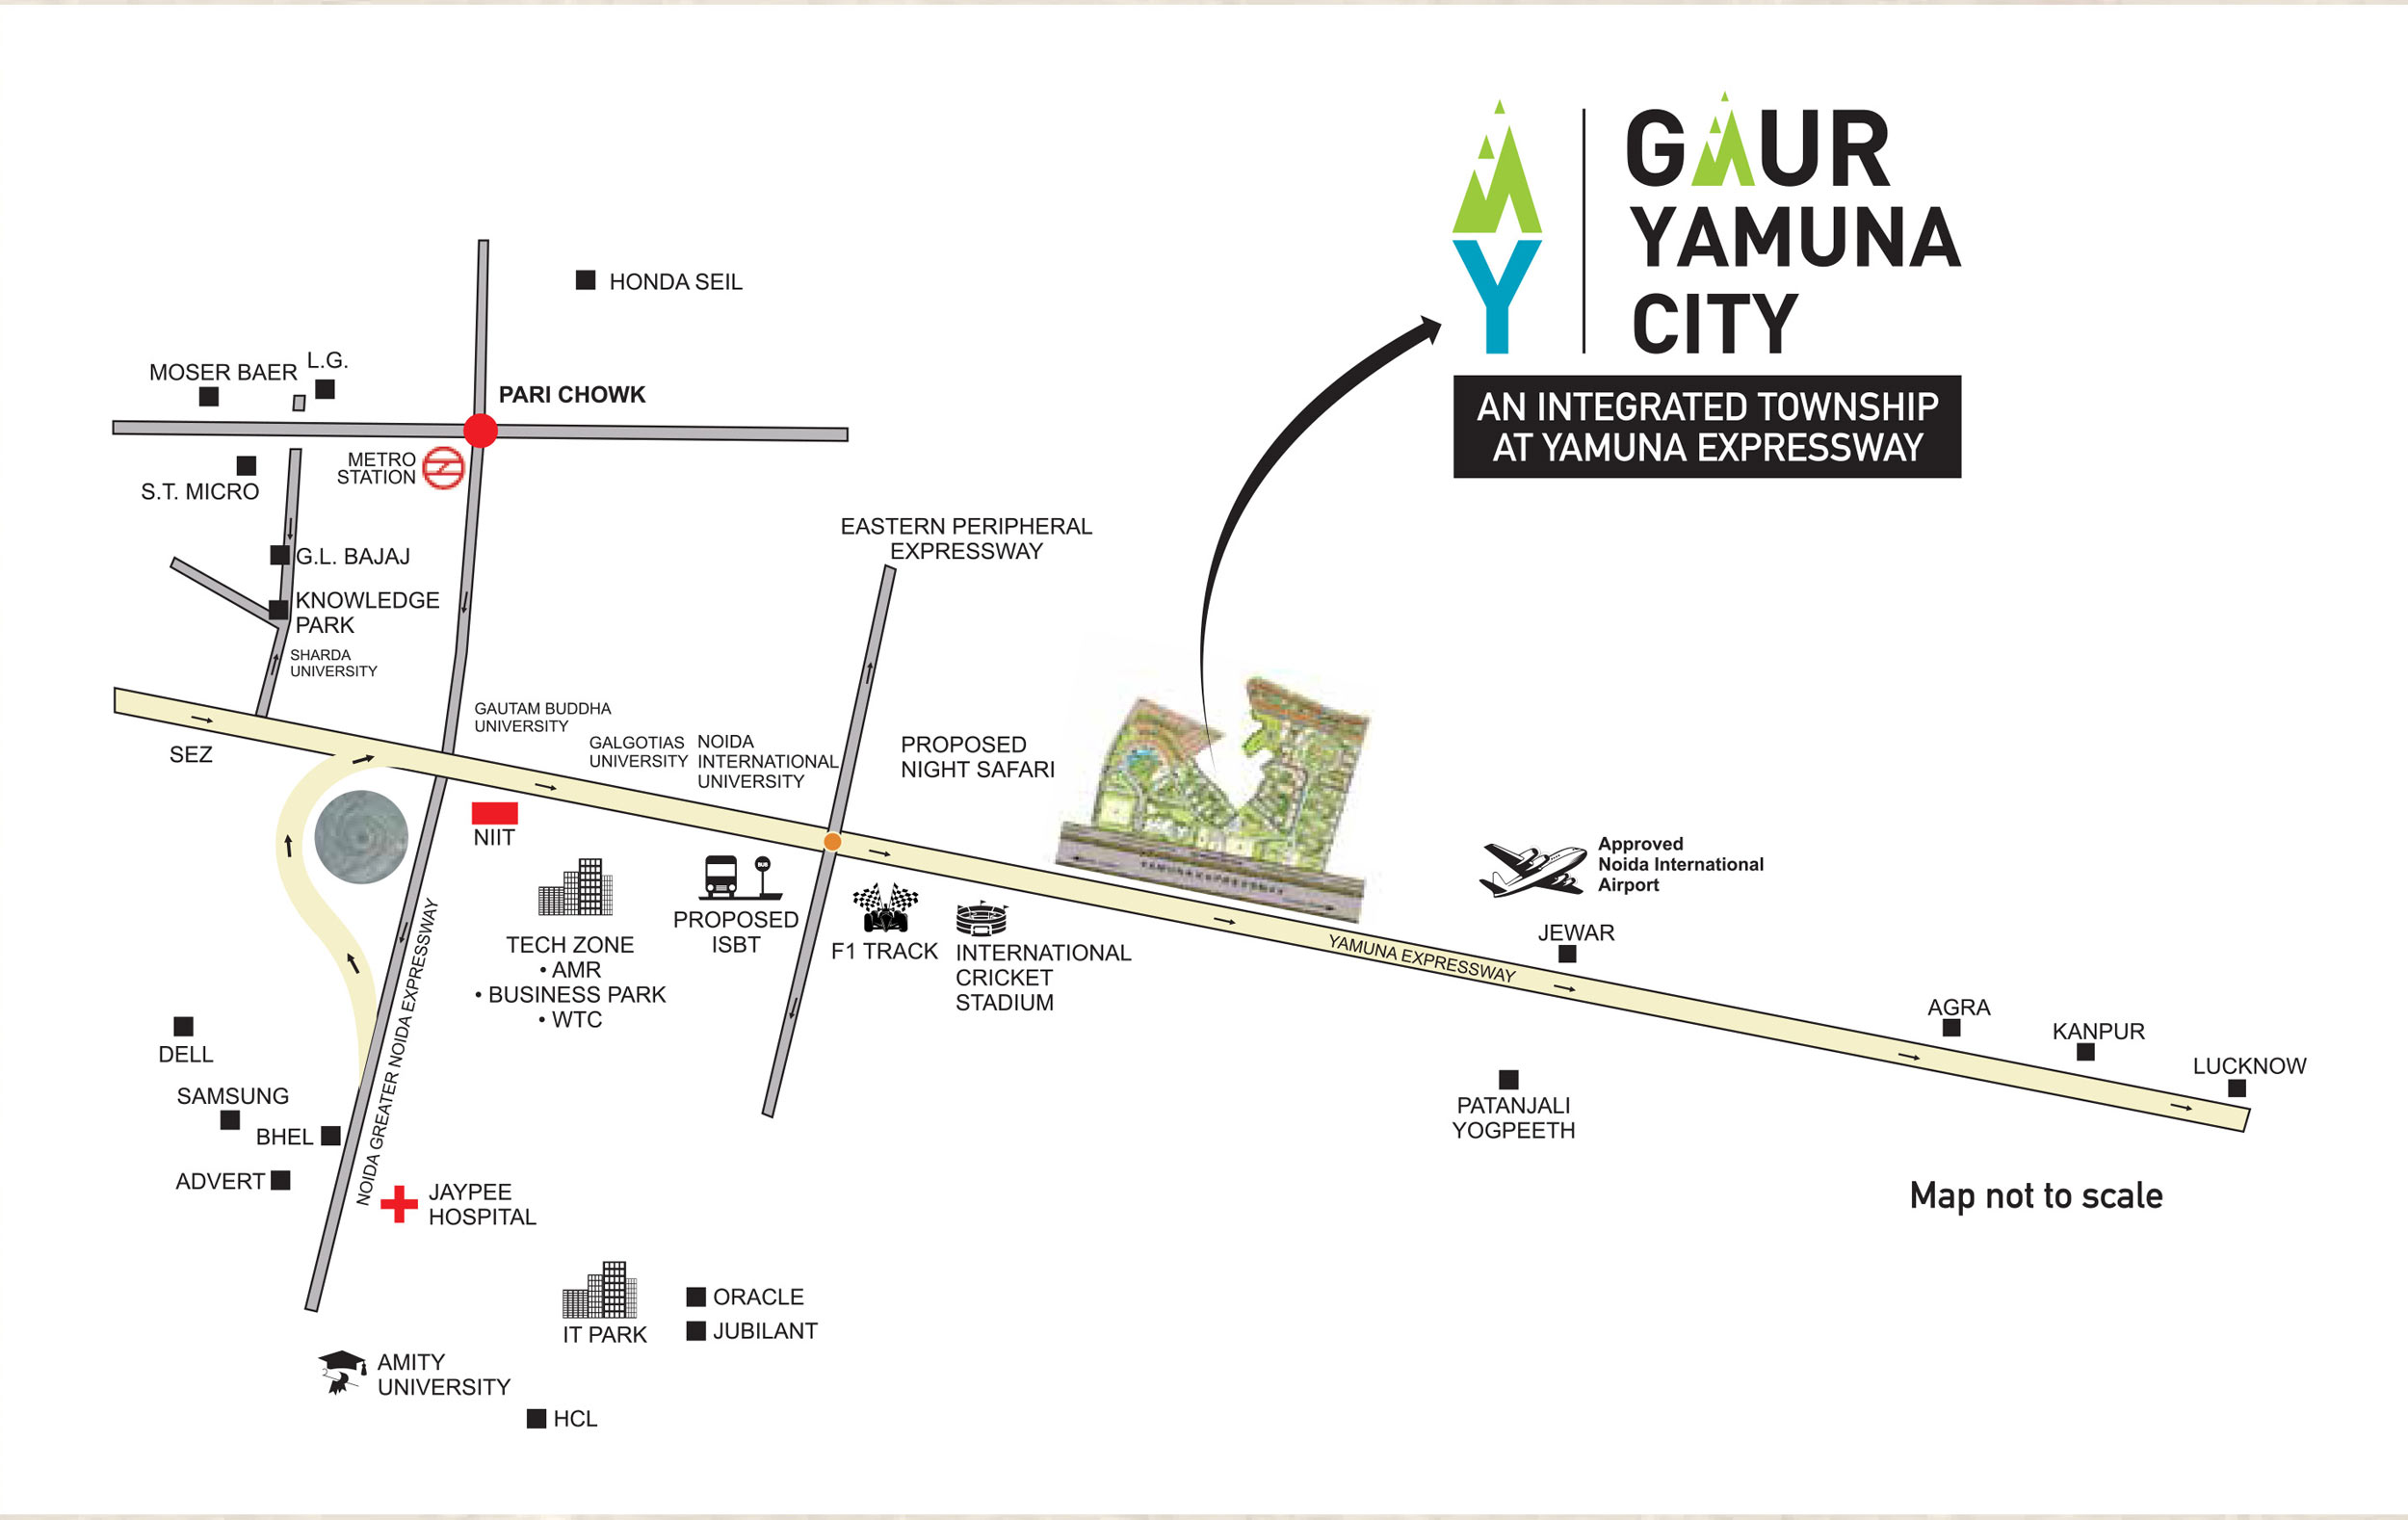 Gaur Yamuna City 6th Parkview Location Map